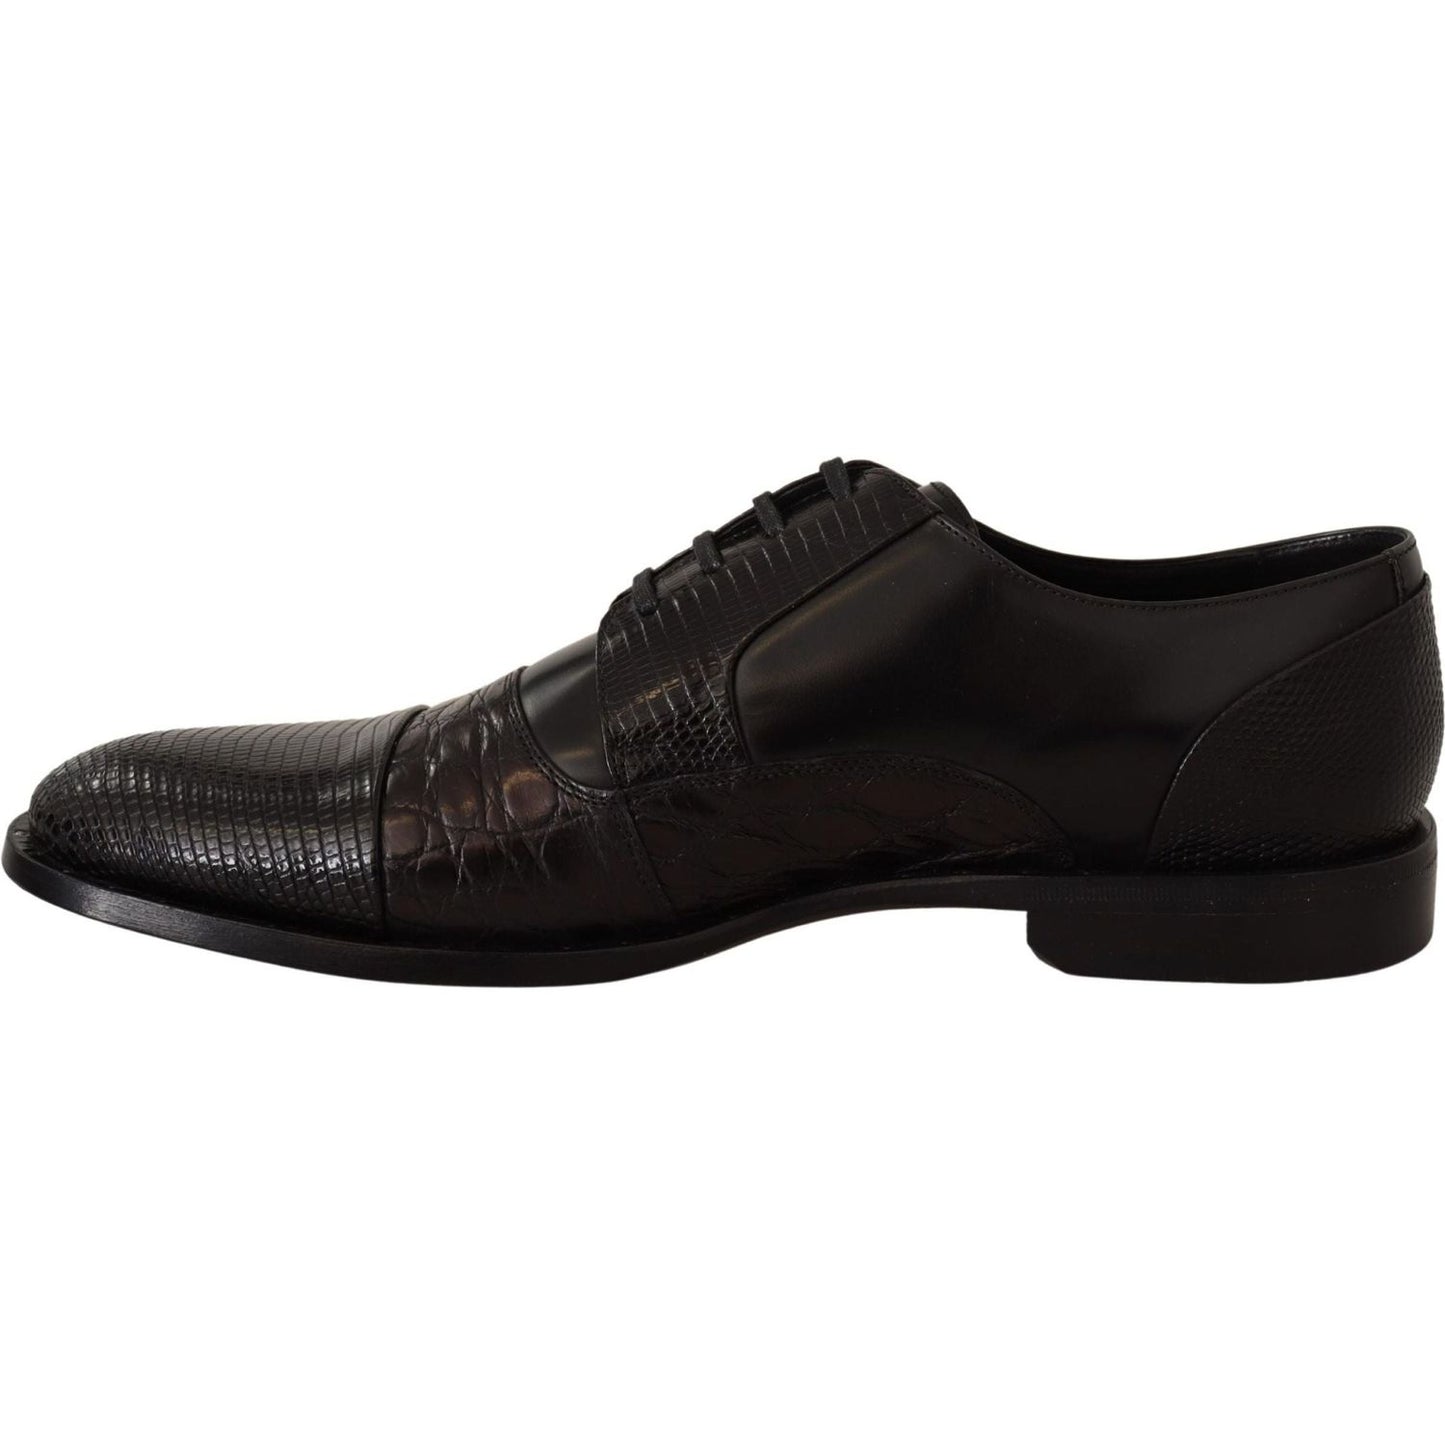 Dolce & Gabbana Elegant Black Derby Oxford Wingtips black-leather-exotic-skins-formal-shoes IMG_5312-scaled-2abdb35b-e54.jpg